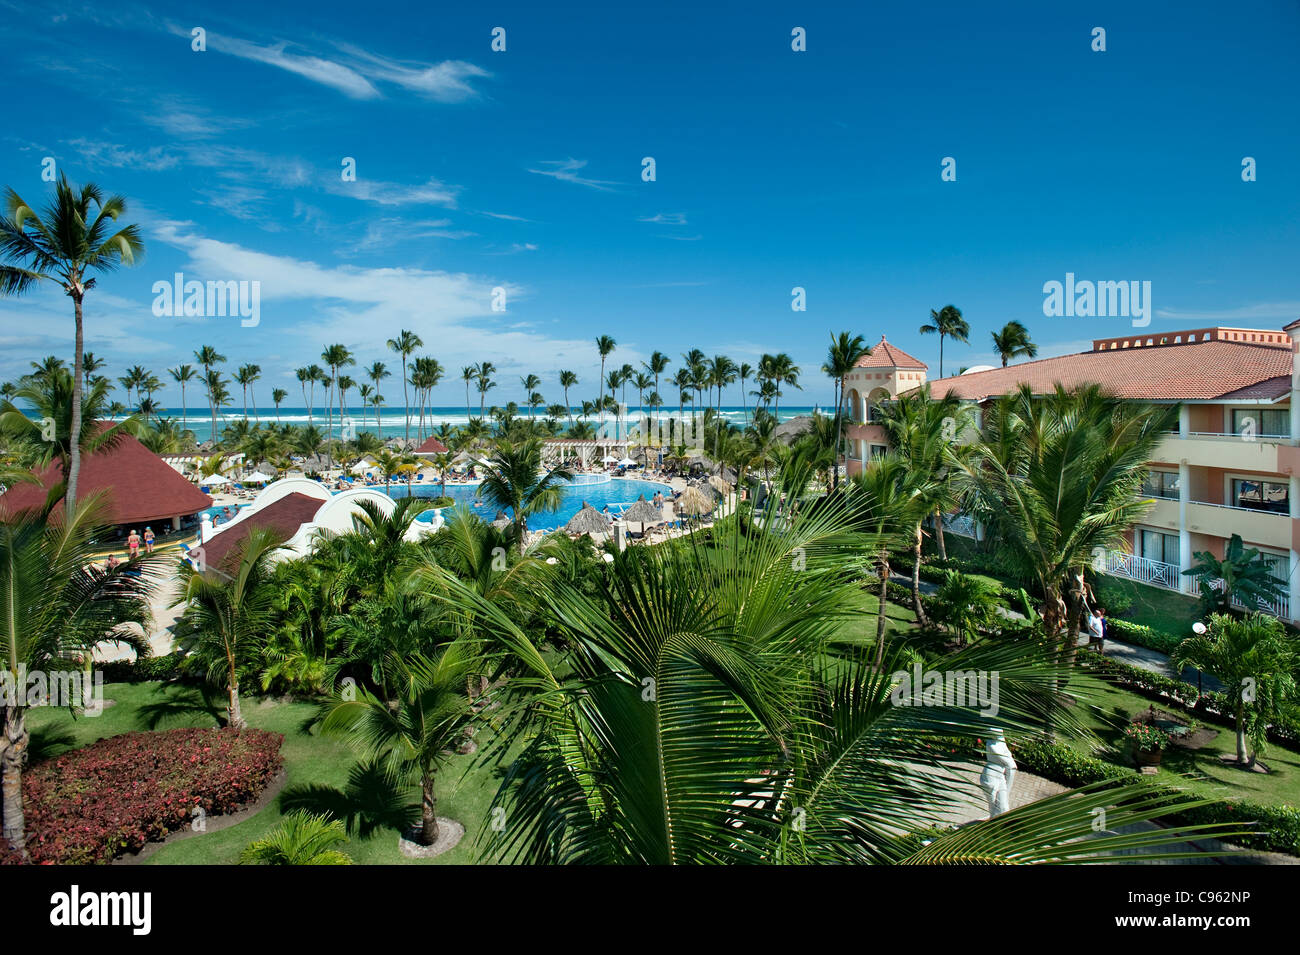 Overview of Gran Bahia Principe Amber Hotel, Punta Cana, Dominican Republic Stock Photo